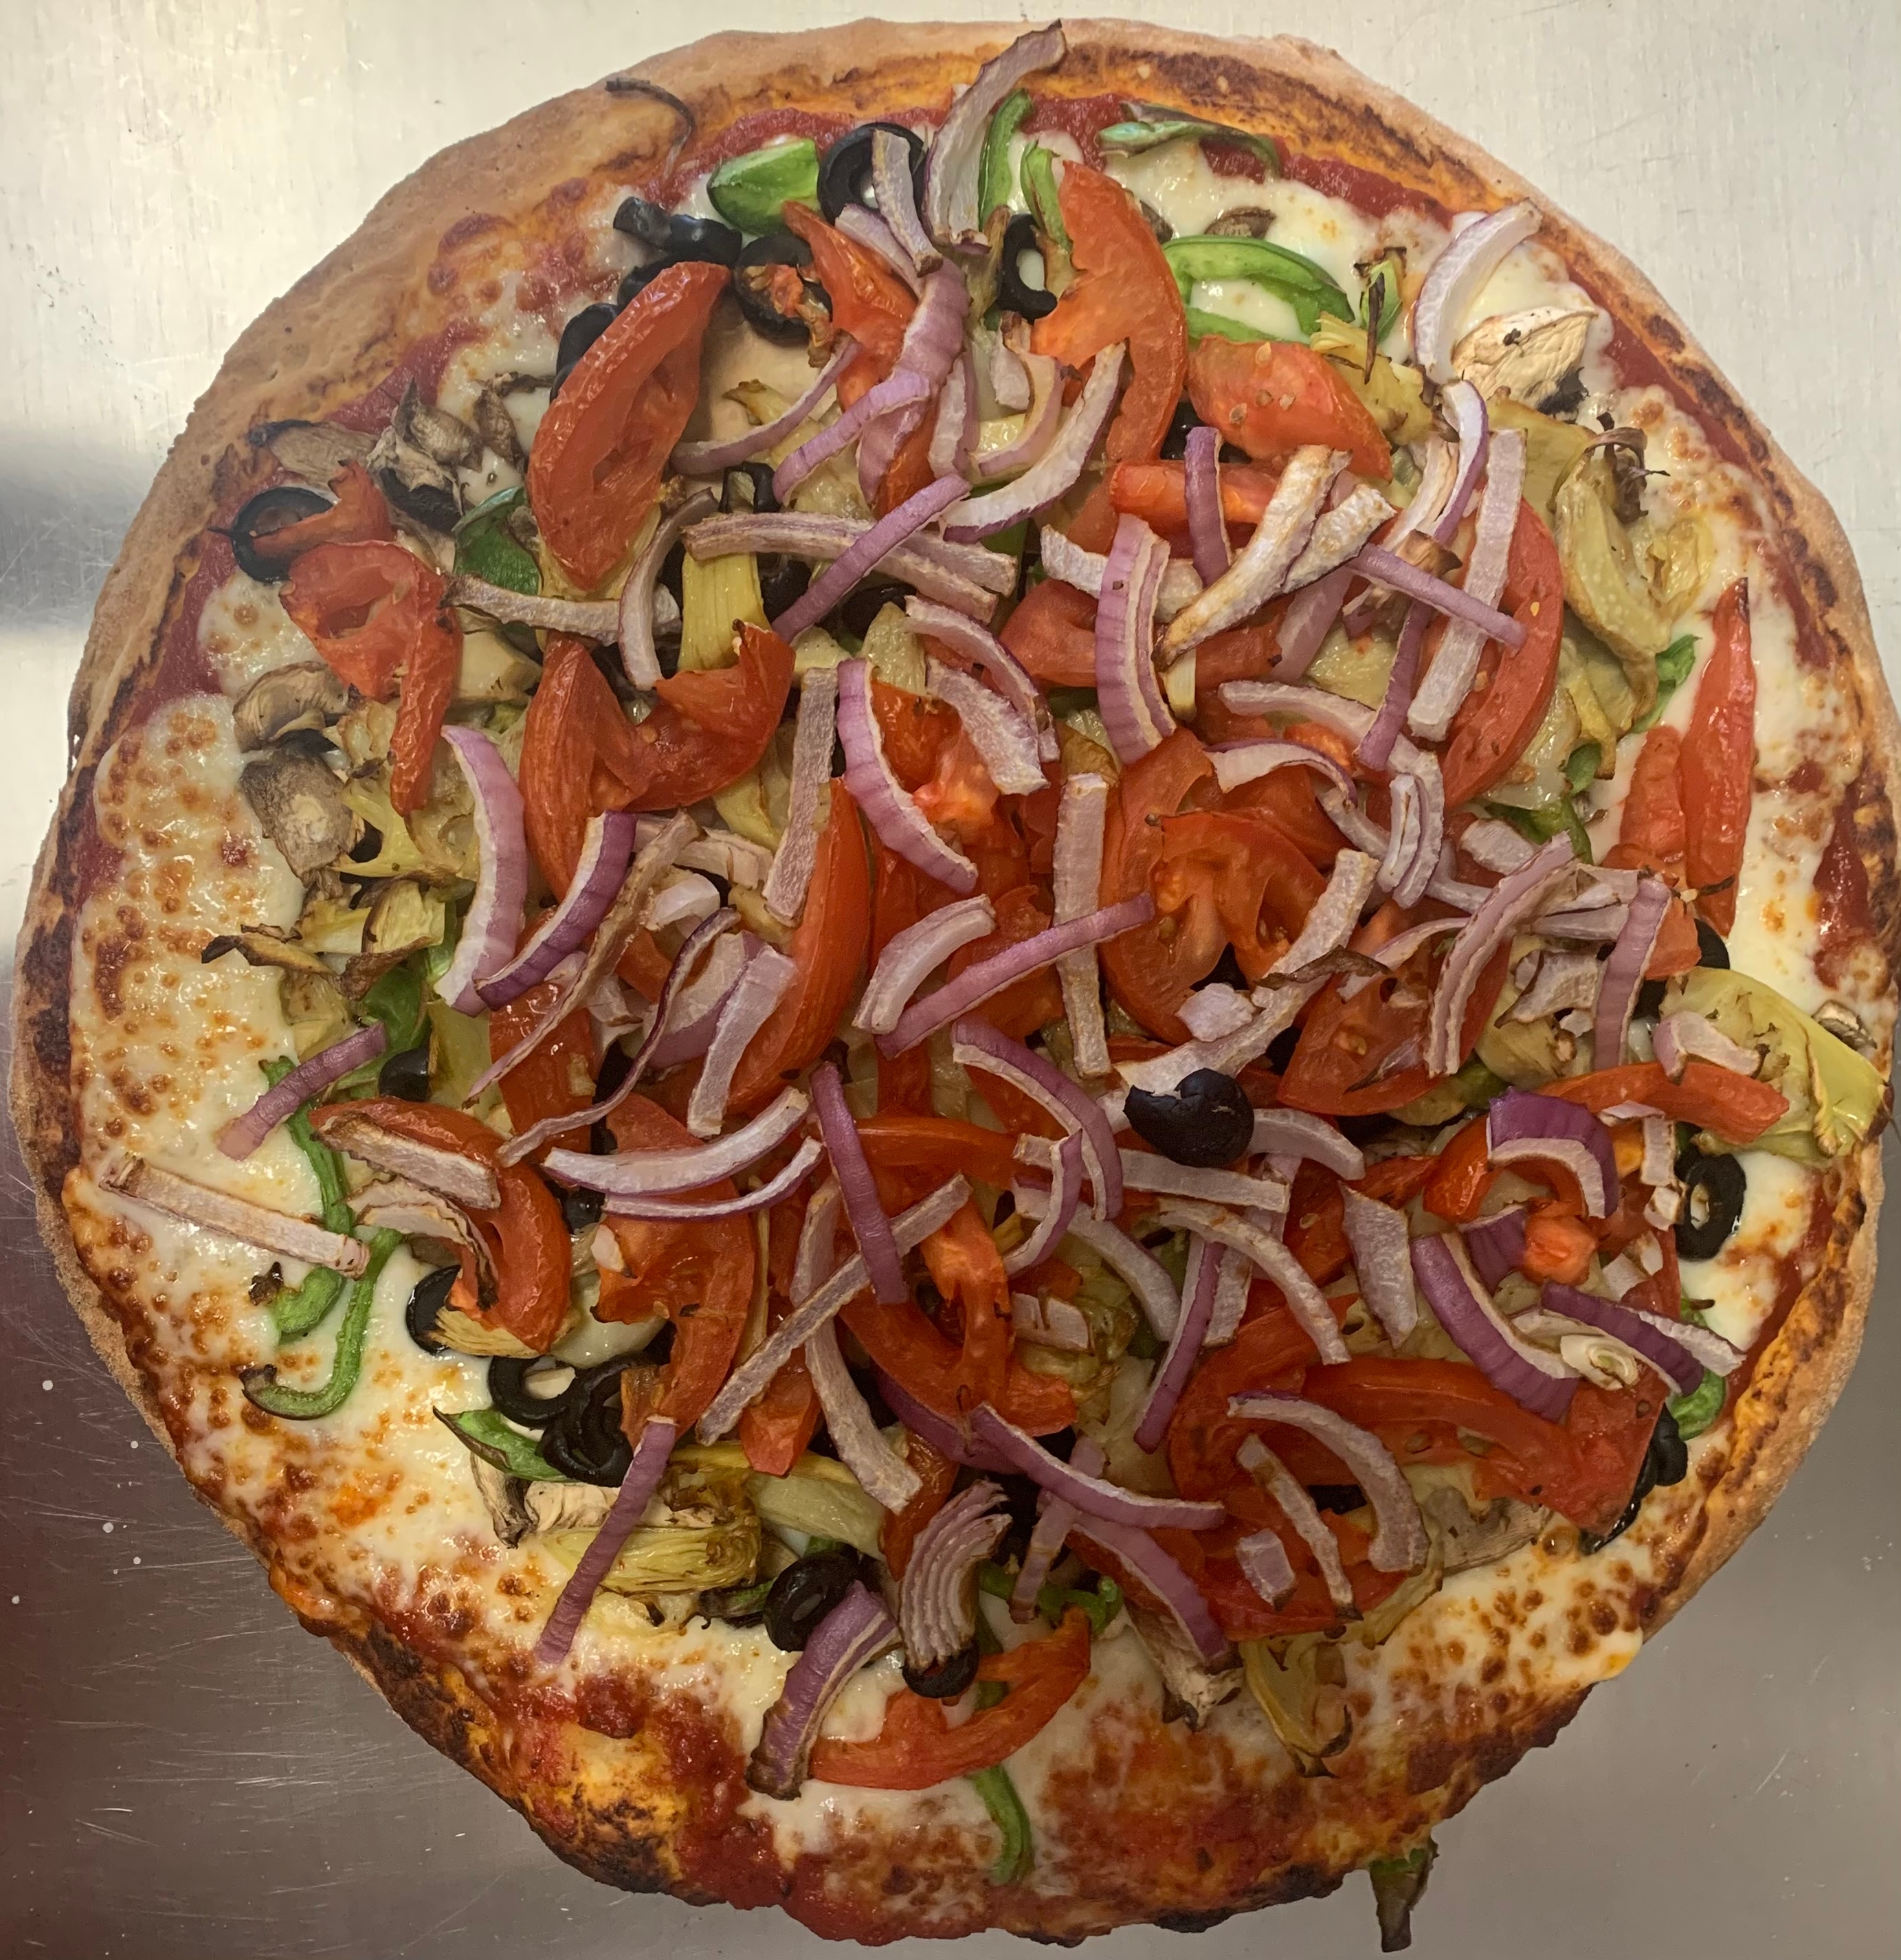 Veggie Delight Pizza (28" Greyhounds)